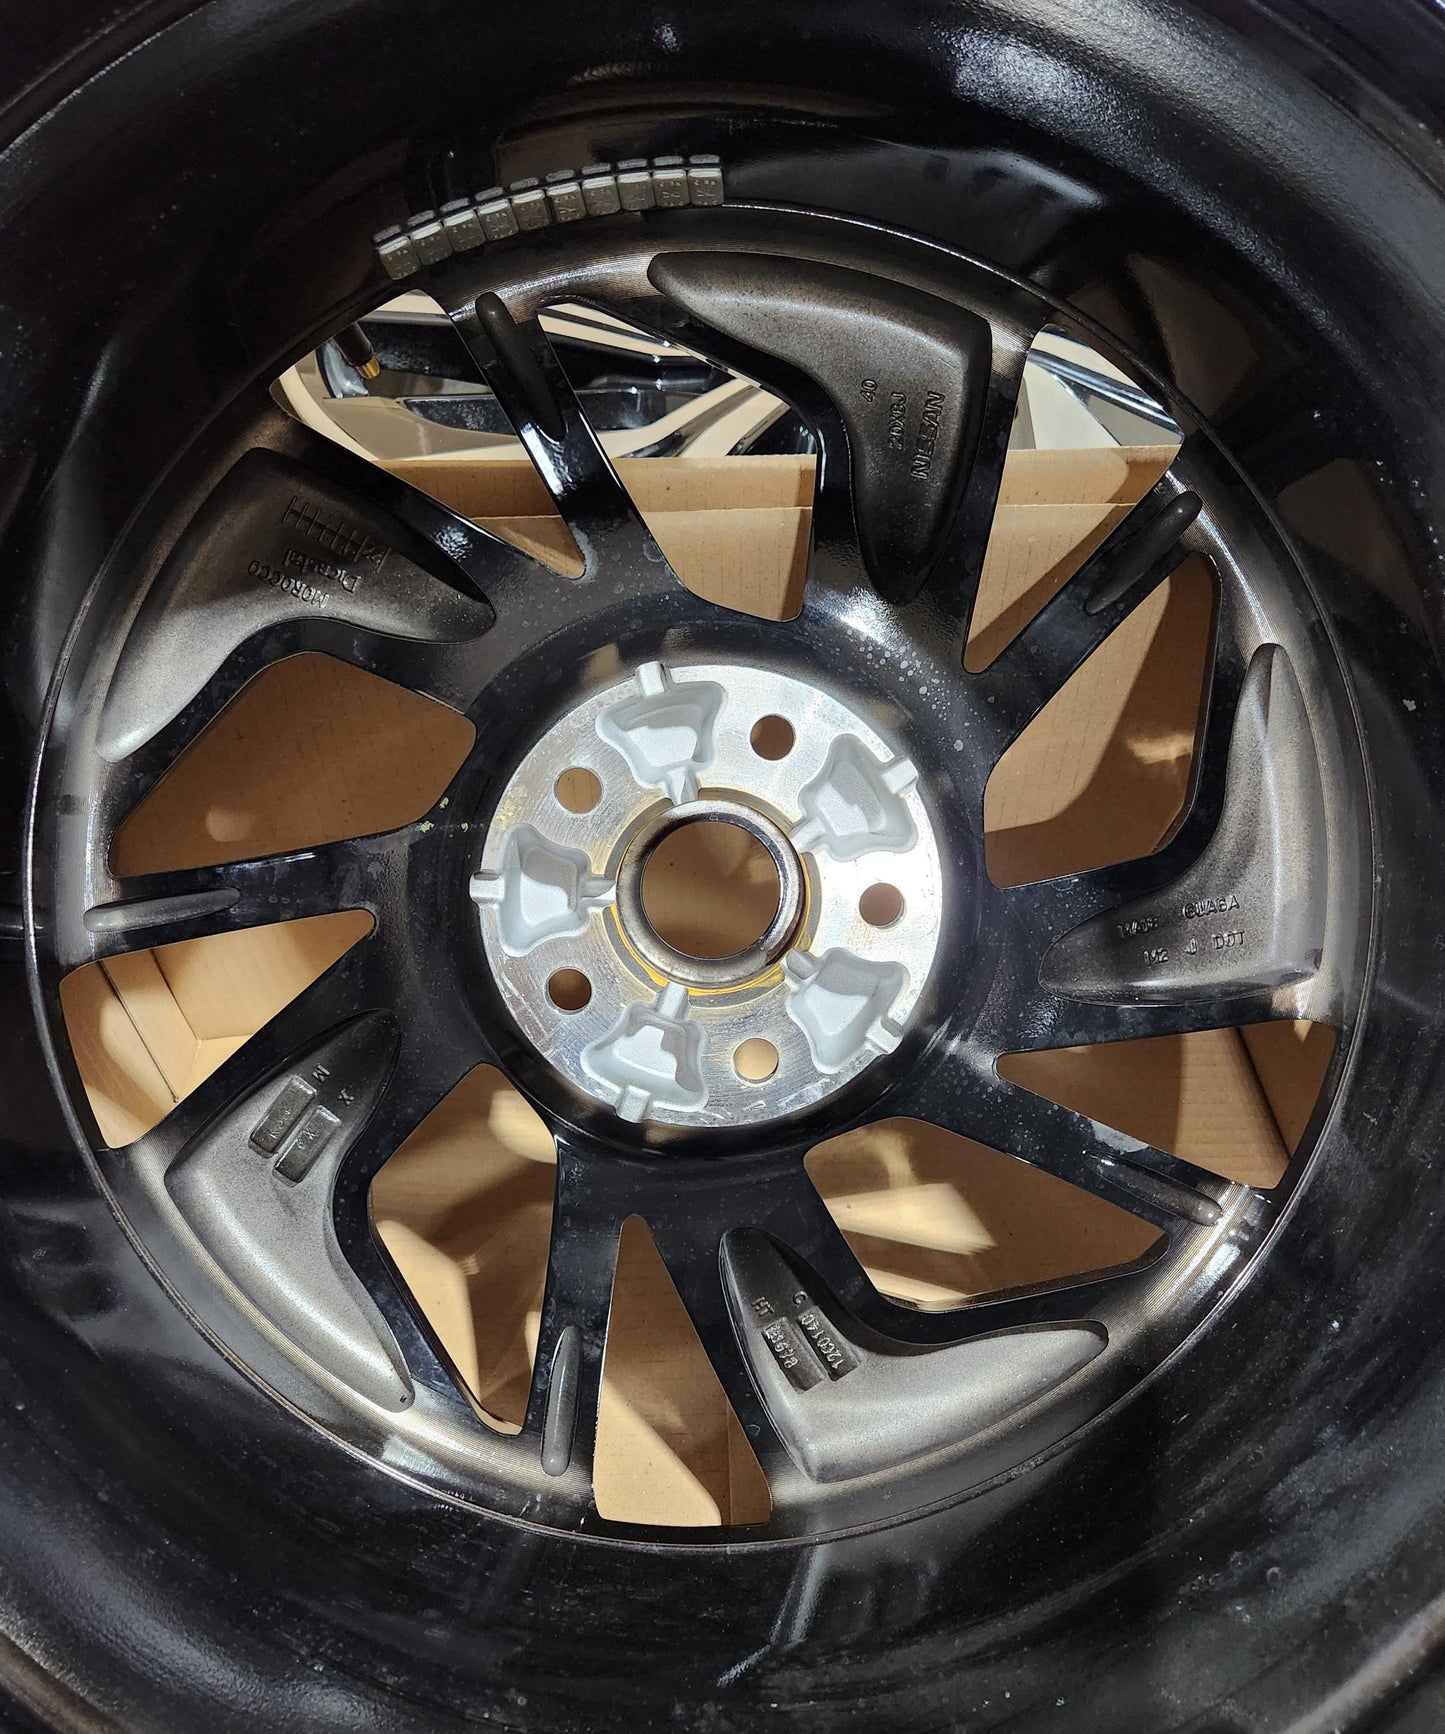 Nissan Qashqai 20" Alloy Wheel OEM Diamond Cut and Gloss Black 6UA6A